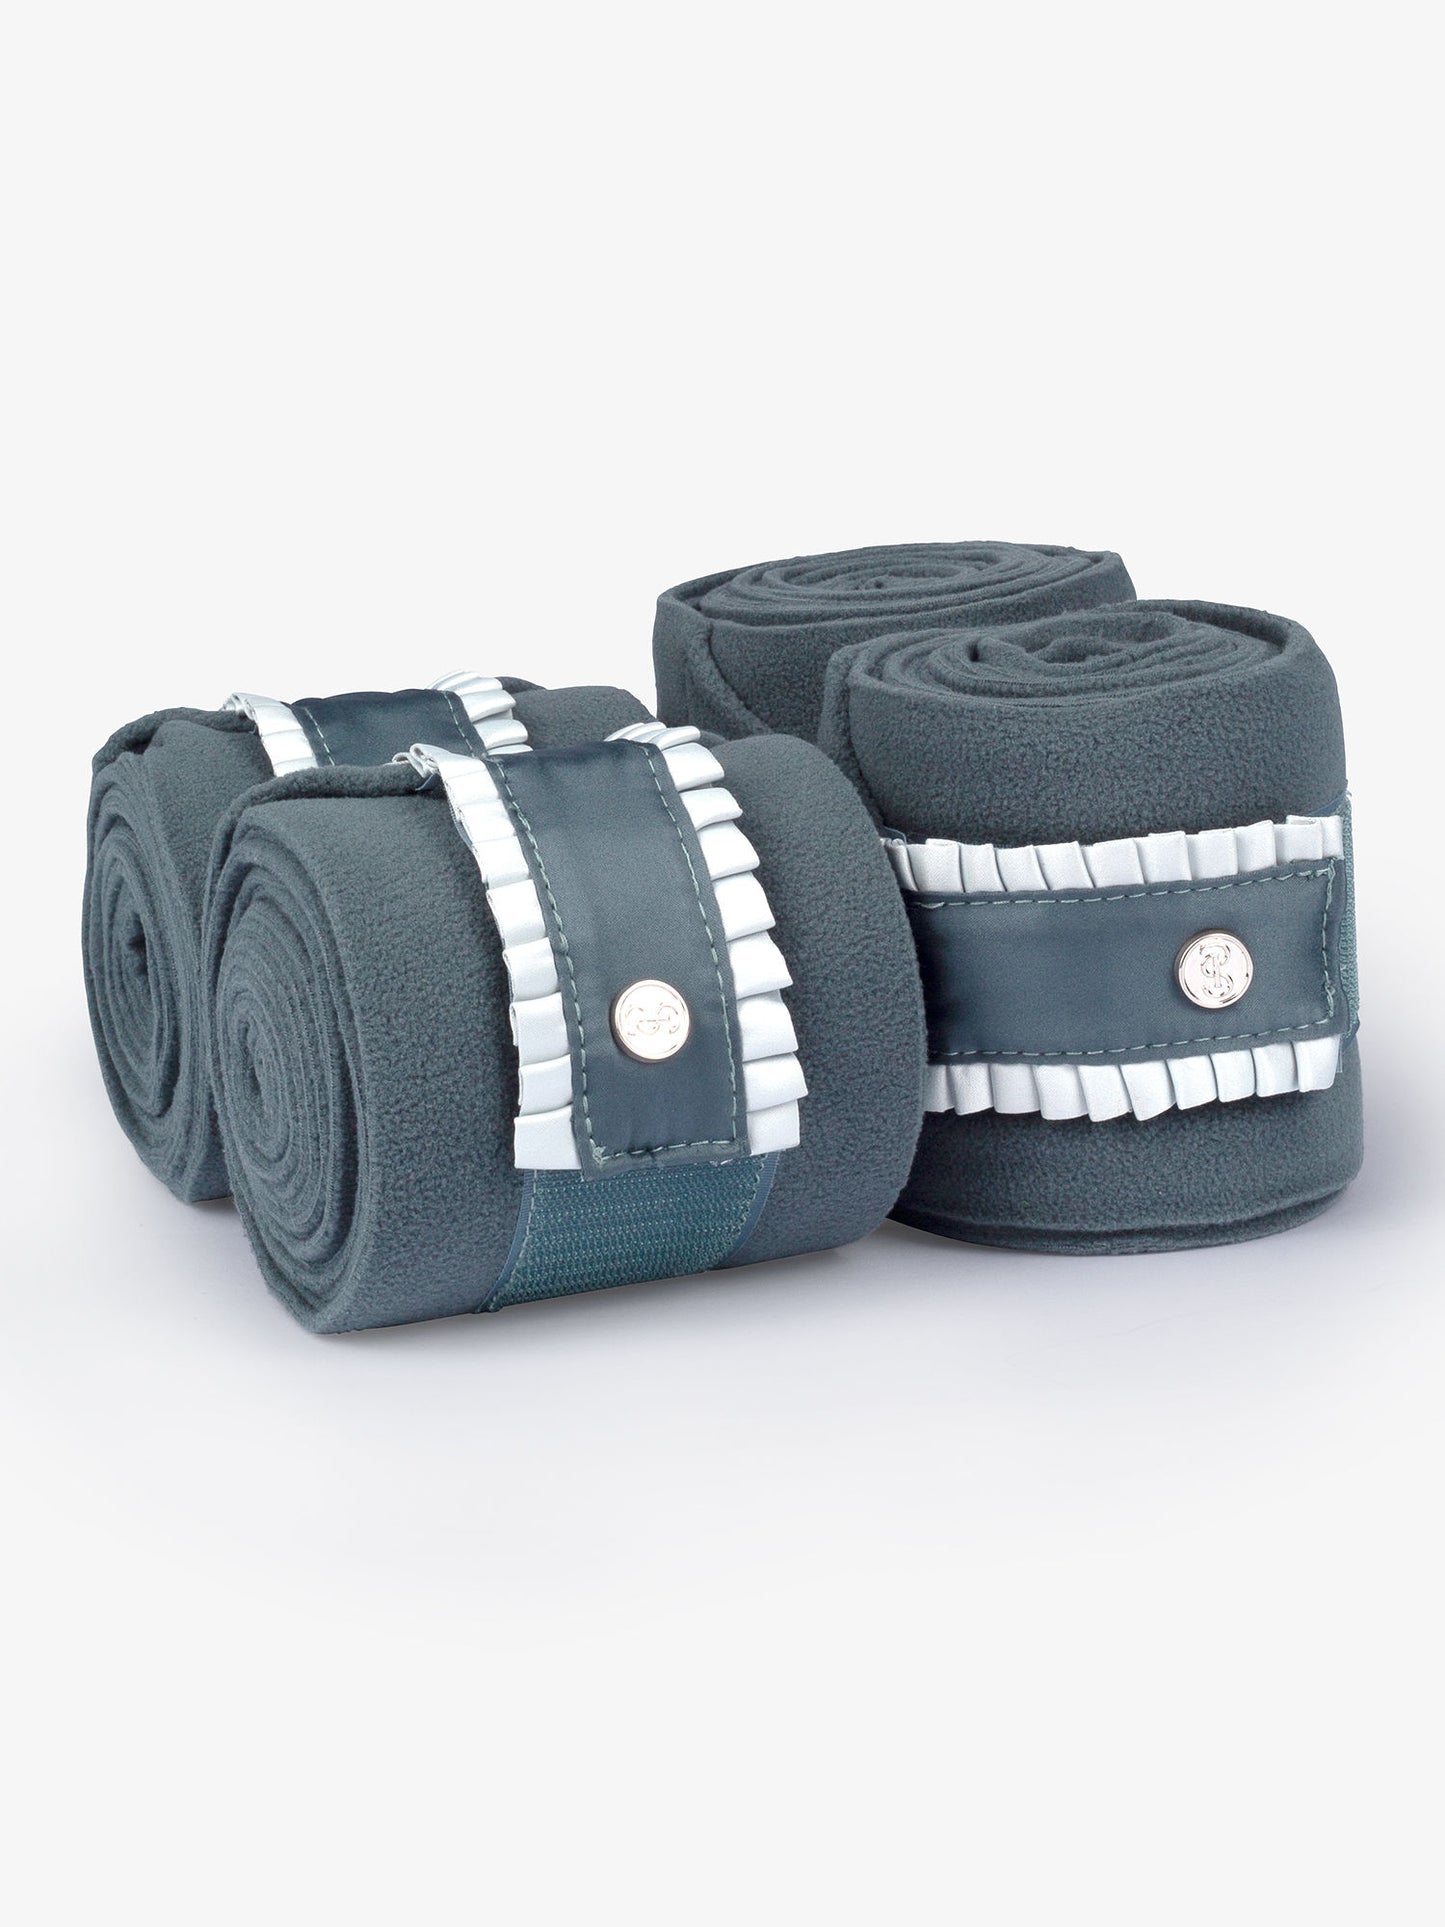 PS of Sweden -  Limited Edition Pearl Ruffle Dressage Saddlepad & Bandages Set - Steel Blue